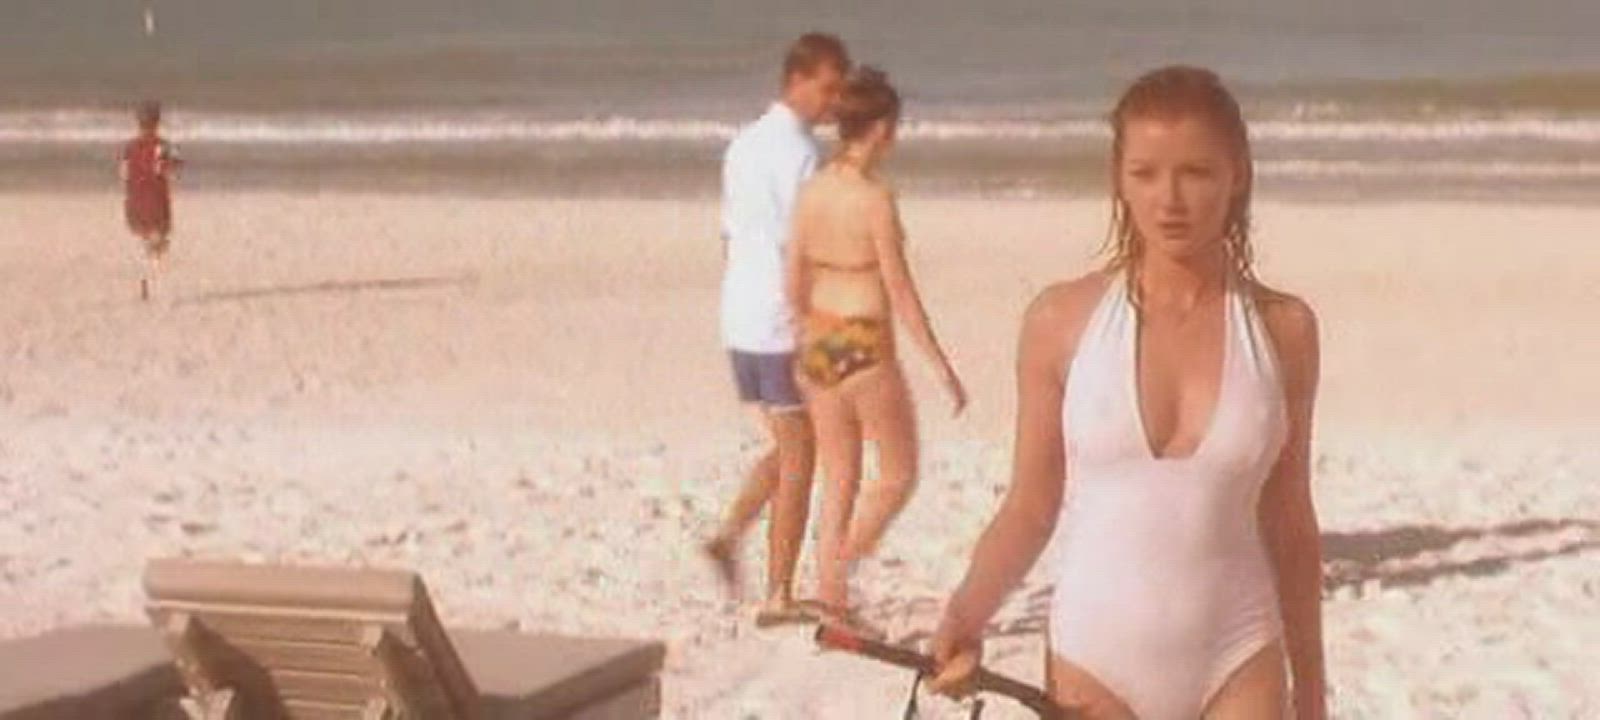 Beach Bed Sex Cinema USA clip